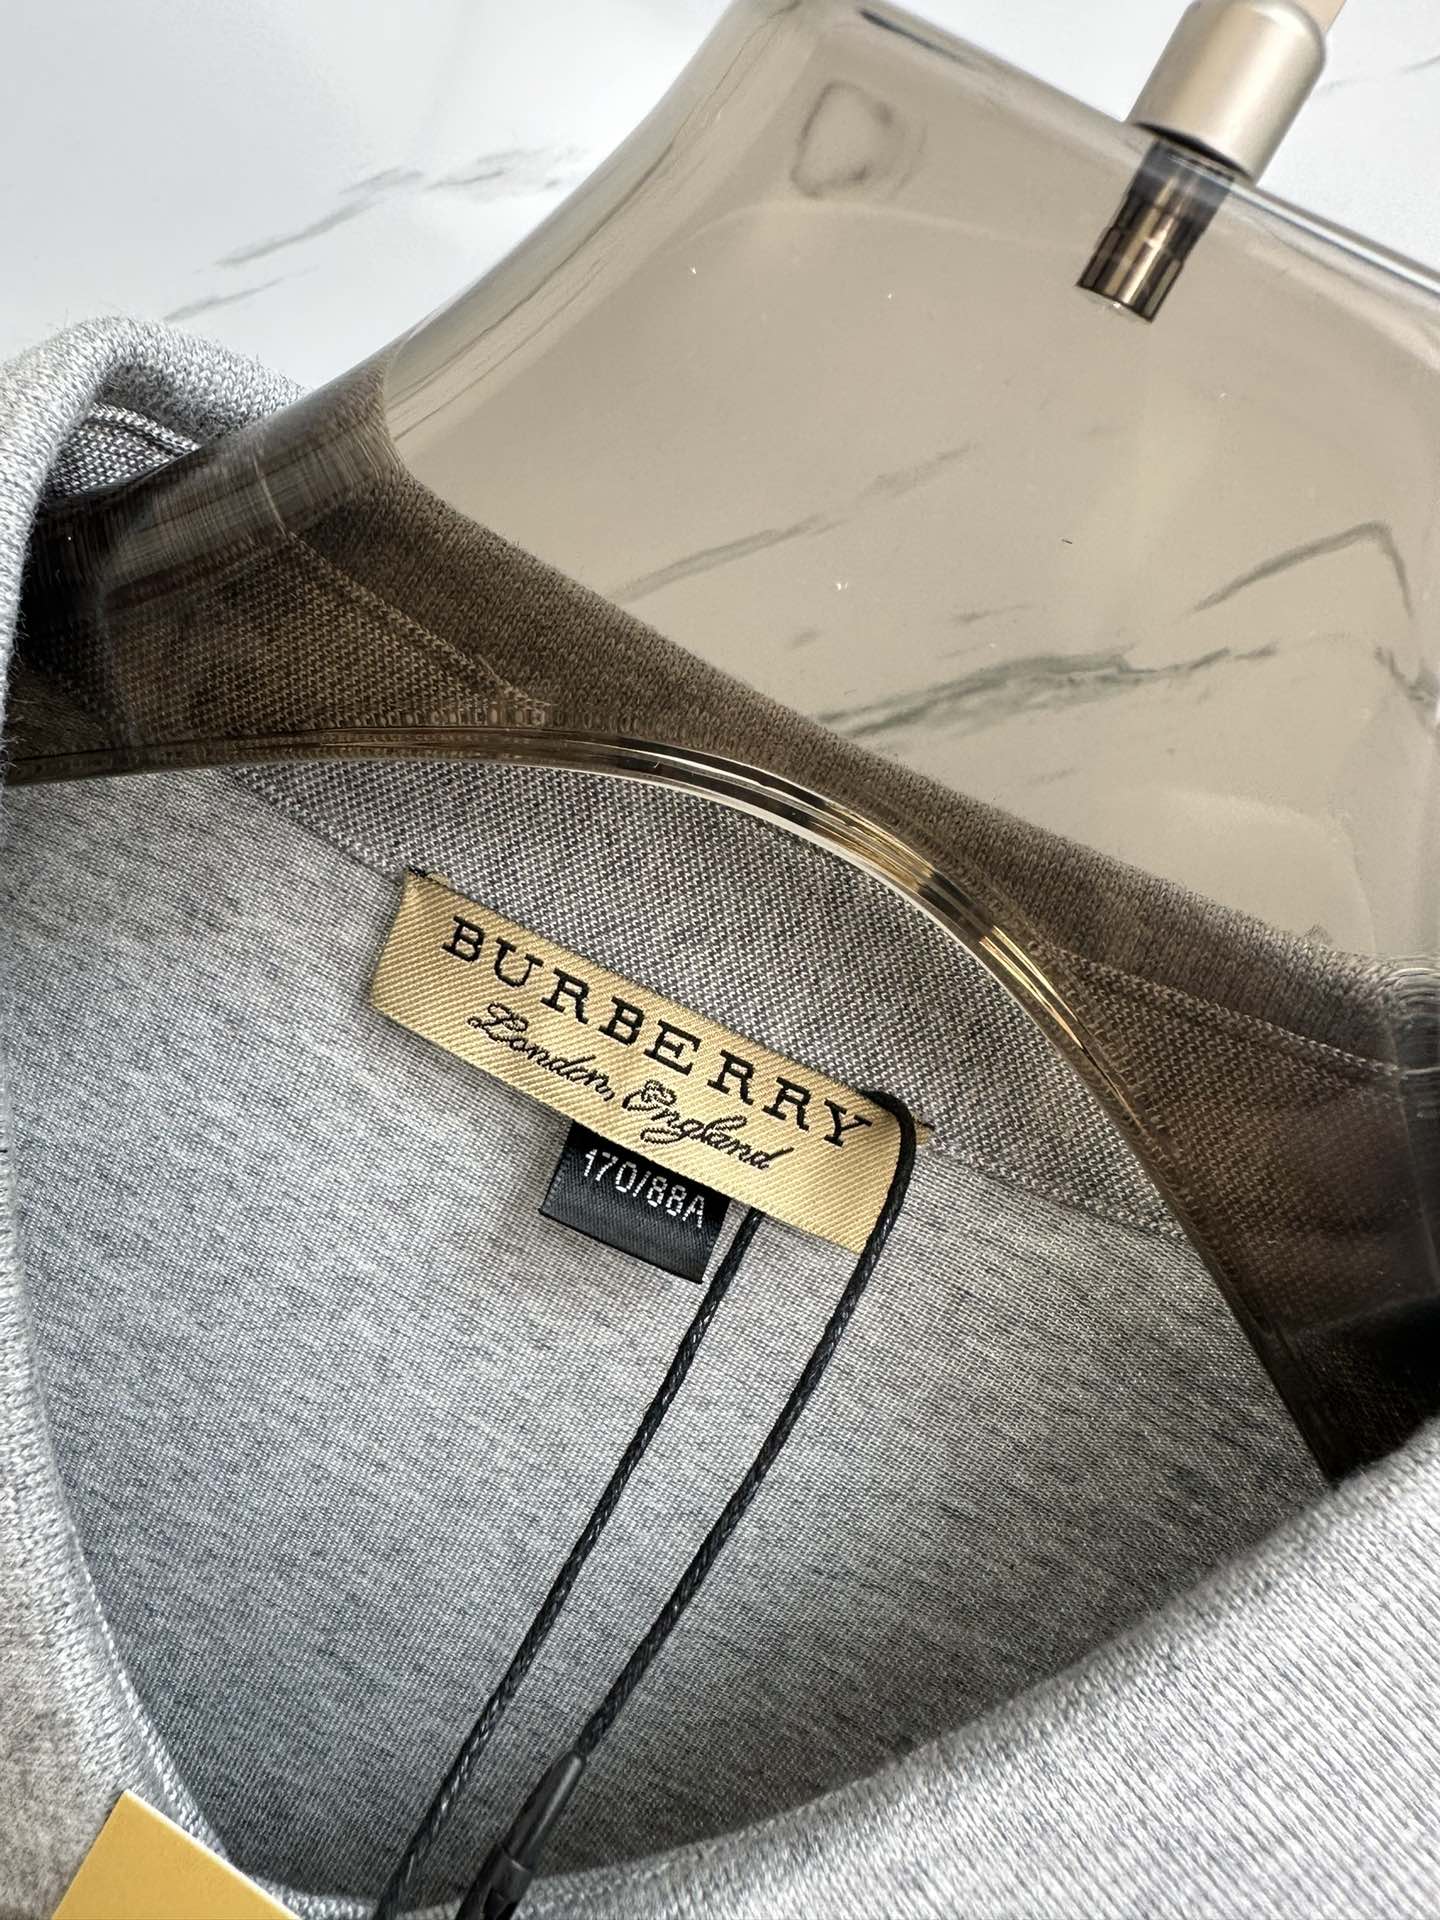 BURB最新最顶级版本Polo衫短袖最顶级的品质.玉蚕丝顶级制作工艺进口面料专柜款独特设计采用进口高端订